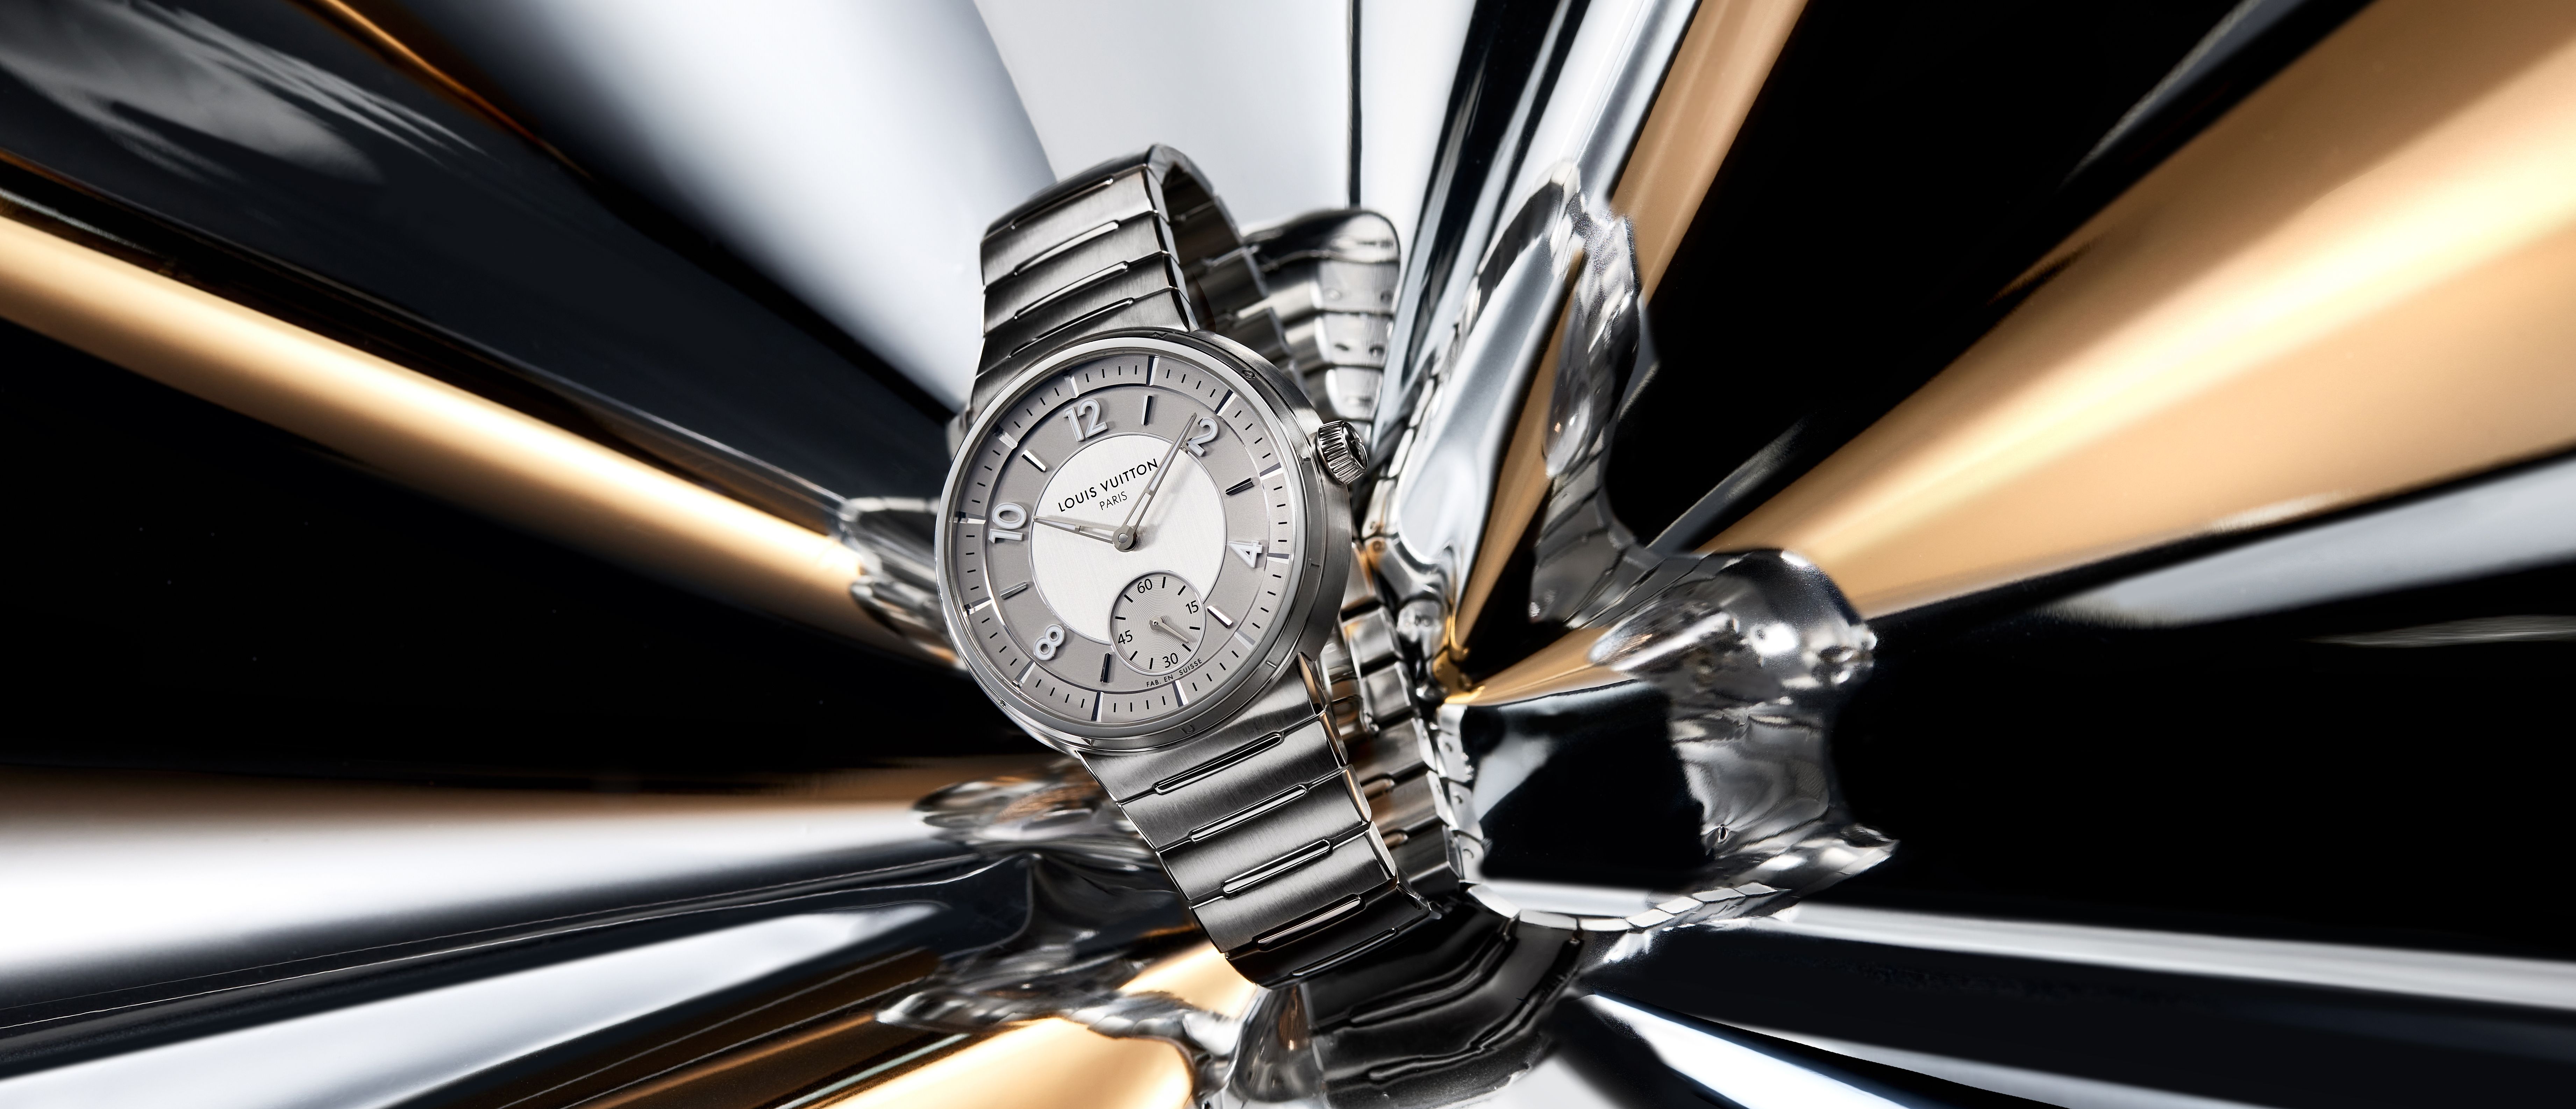 Louis Vuitton Tambour watch celebrates 12 years of watchmaking